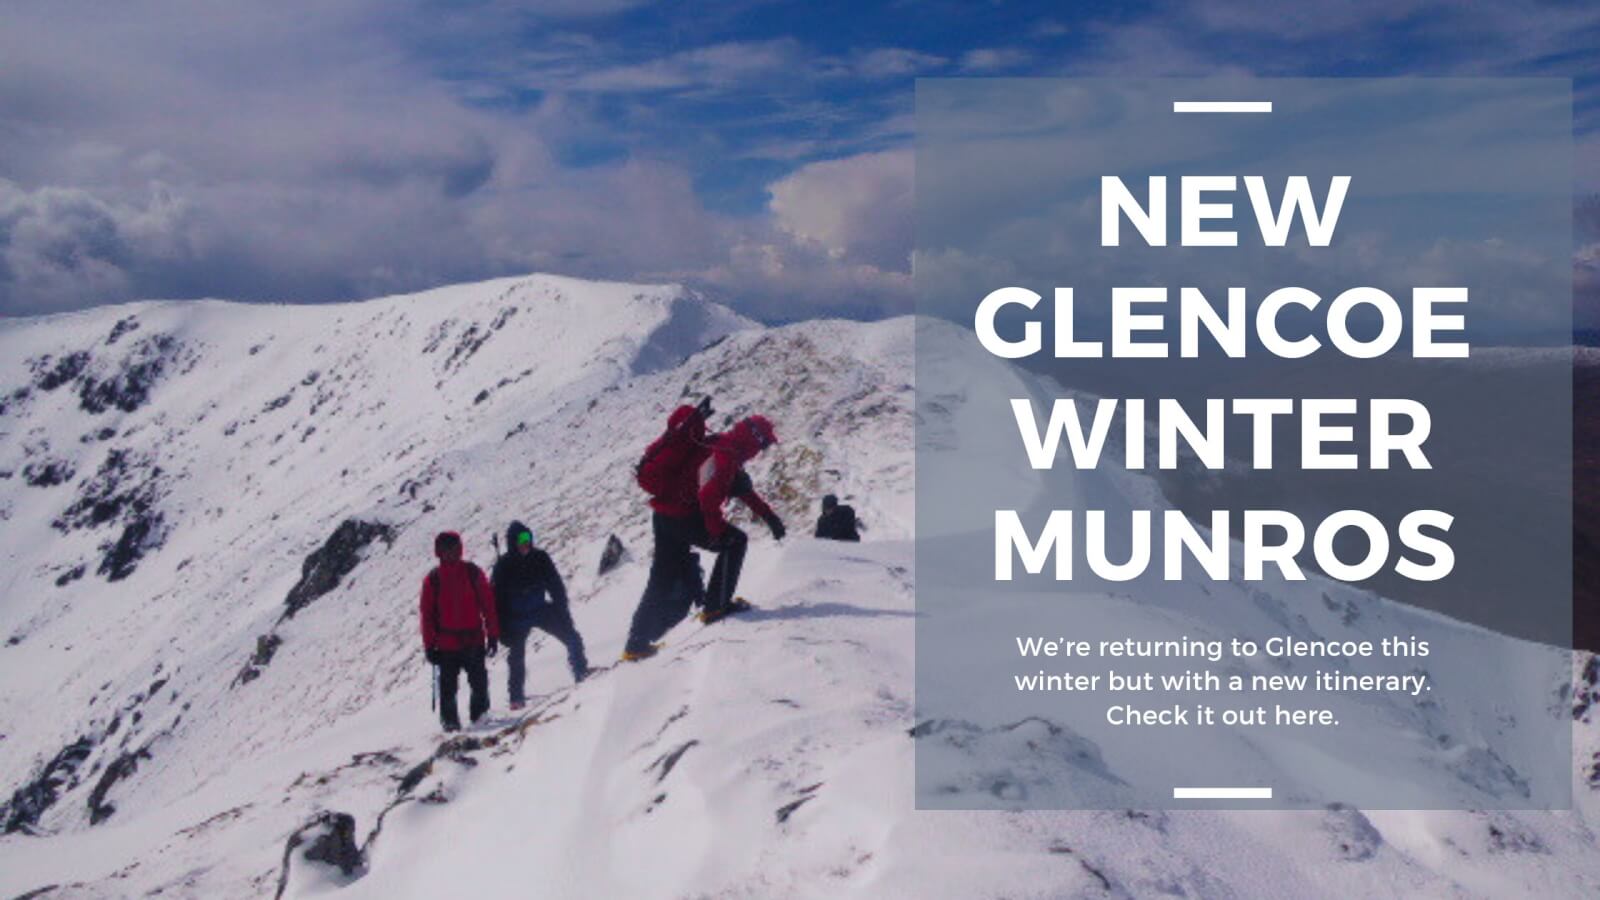 Glencoe winter munros